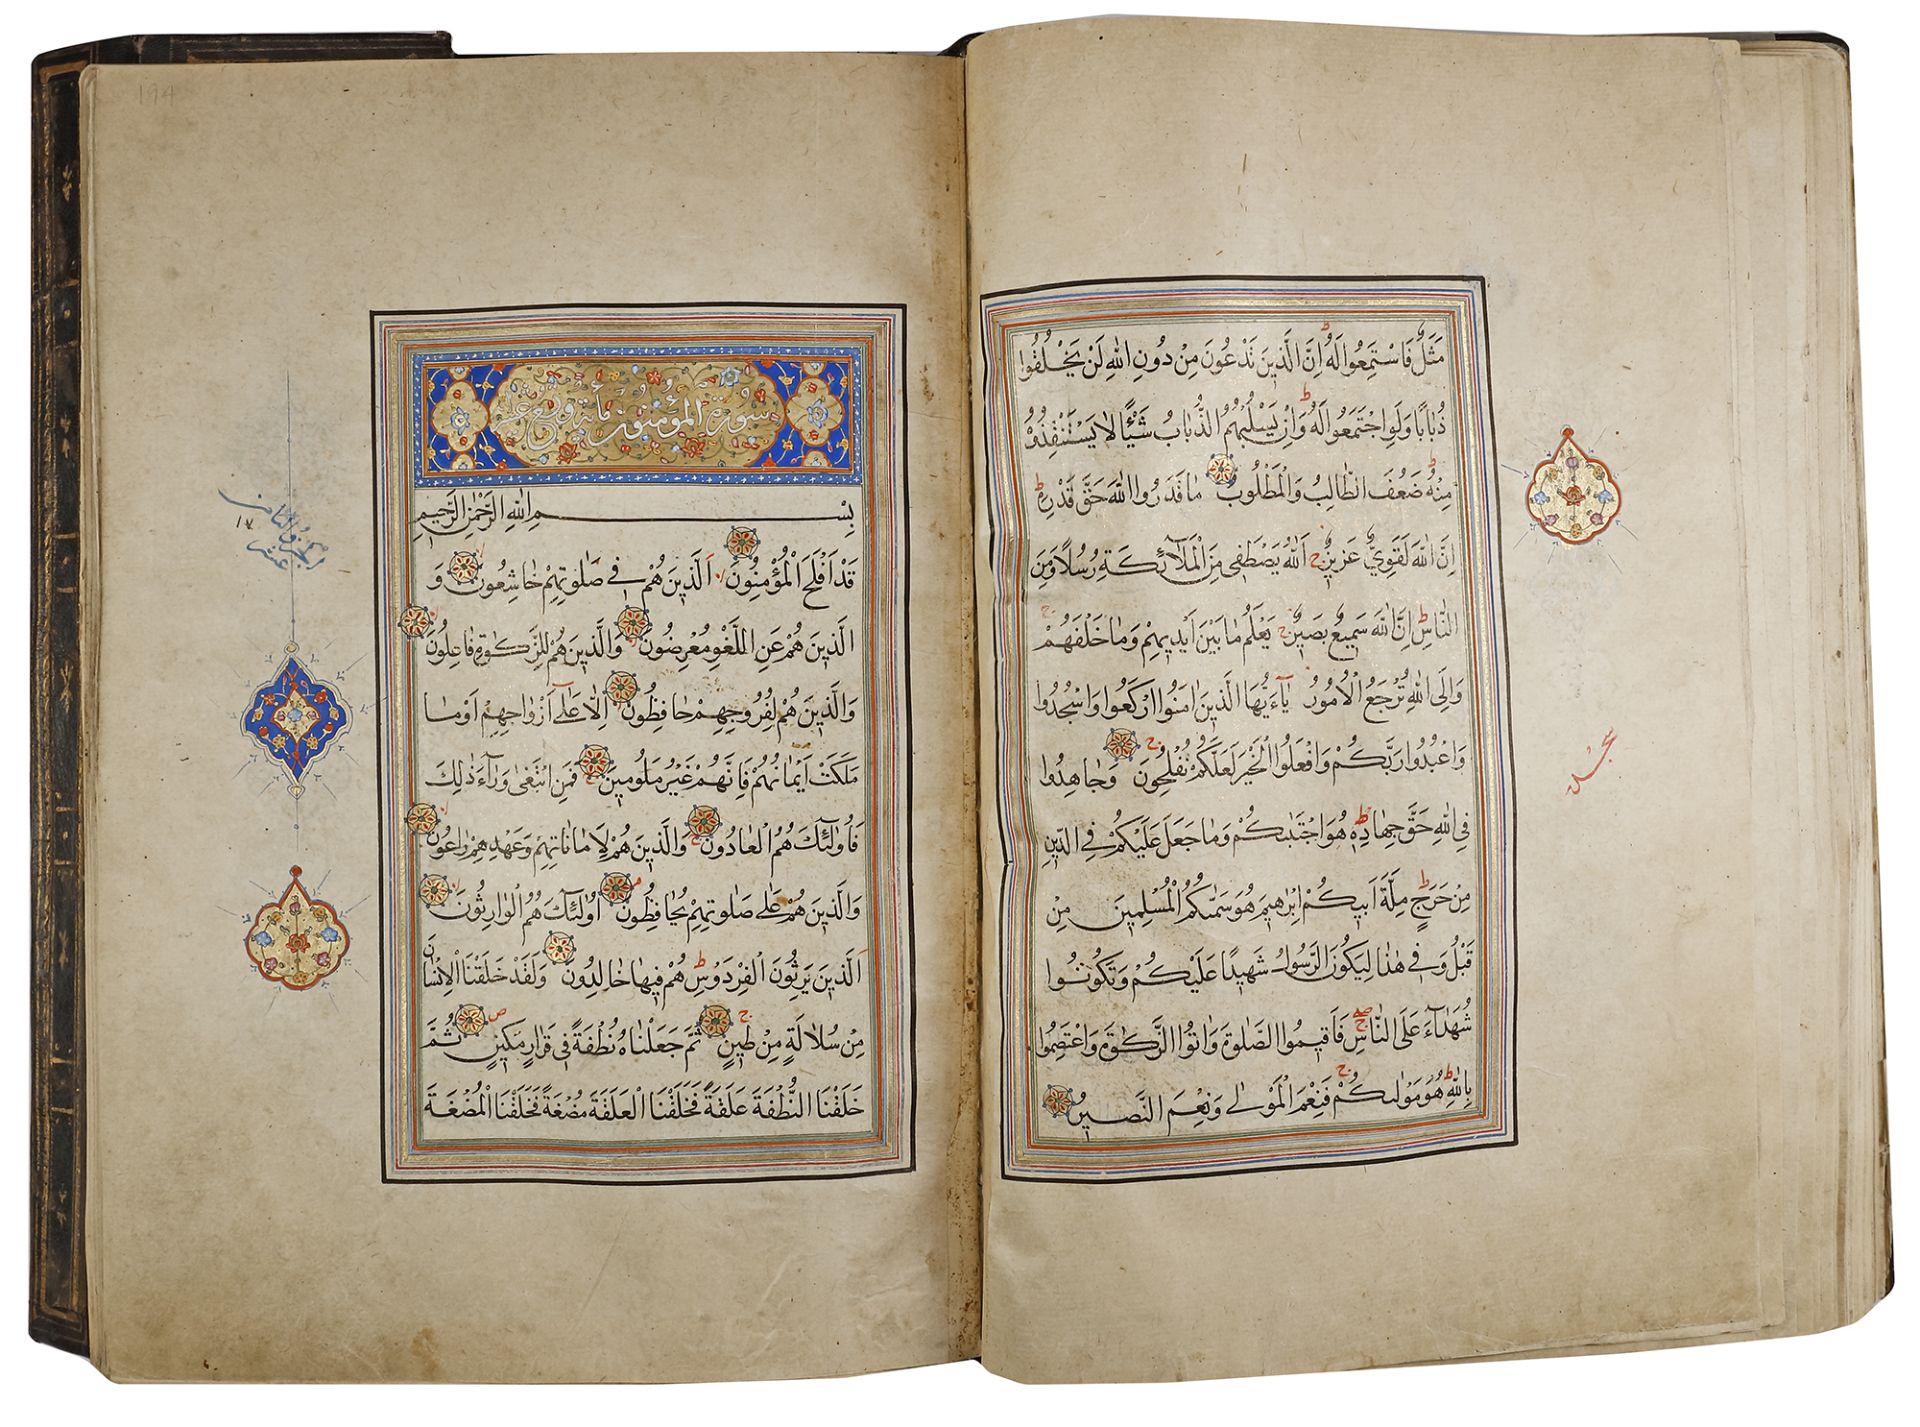 A LARGE ILLUMINATED QURAN, COPIED BY 'ALA'-AL-DIN MUHAMMAD AL-TABRIZI SAFAVID, PERSIA, 16TH CENT - Image 11 of 26